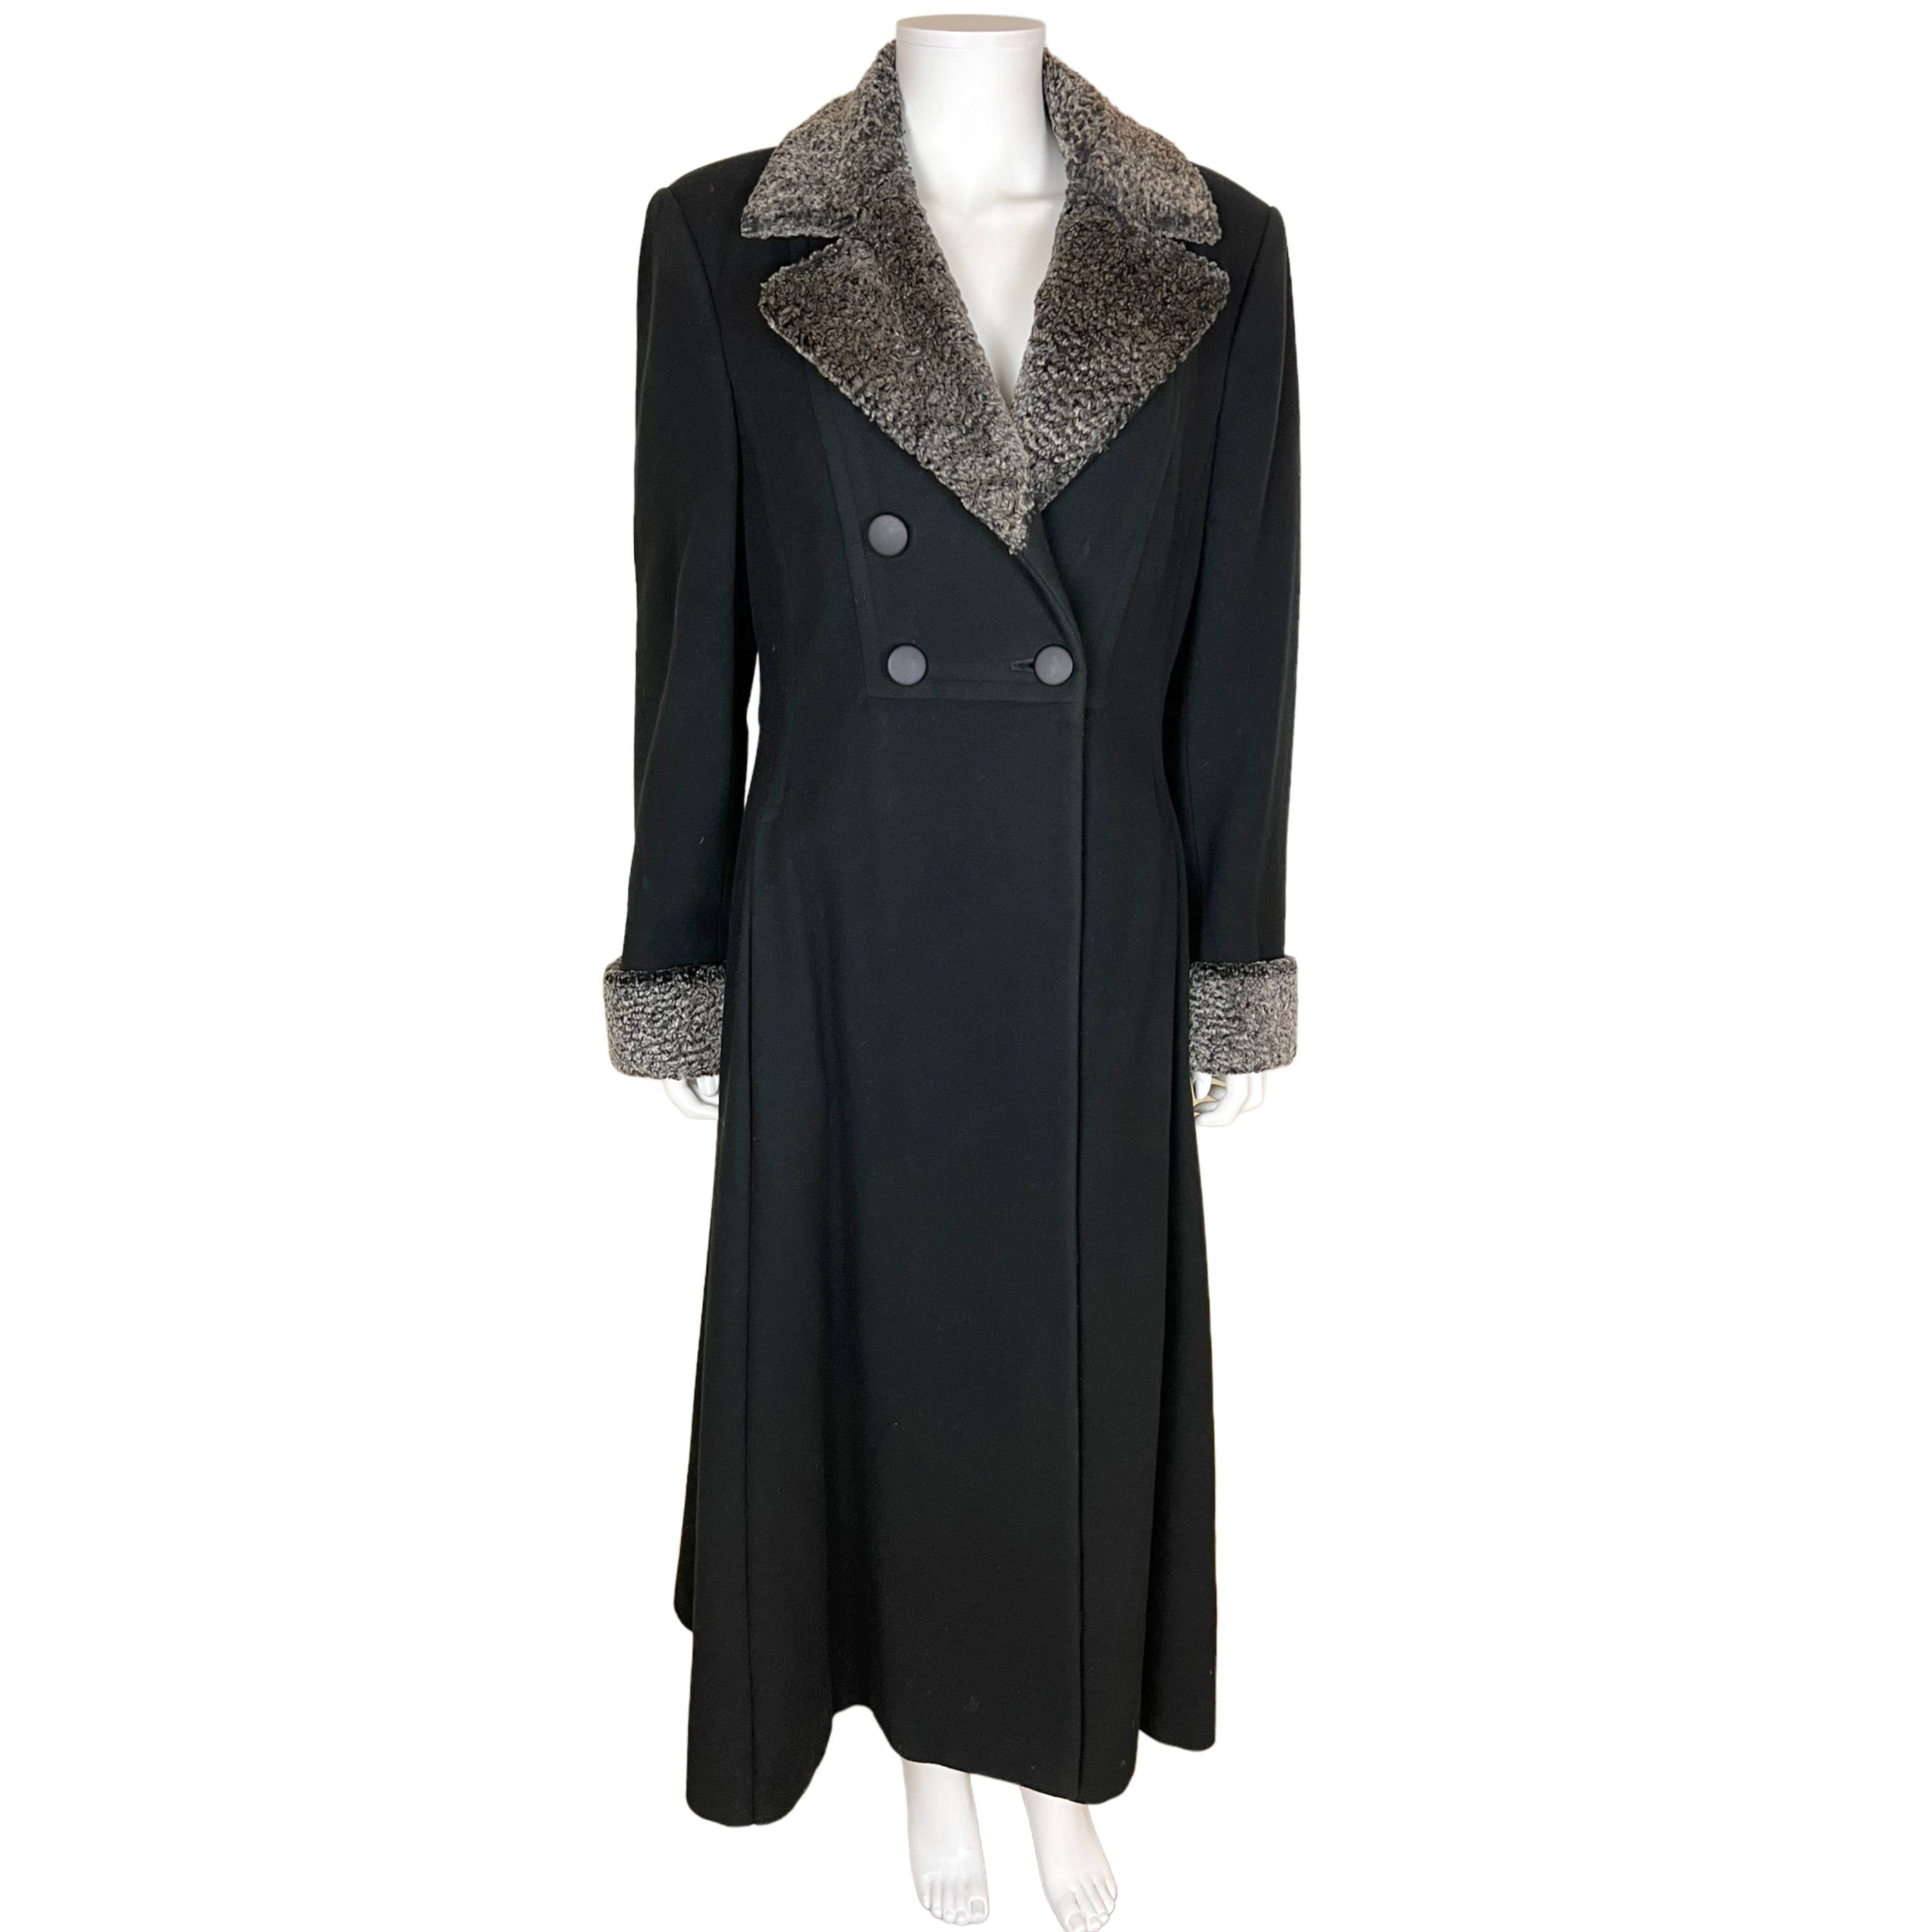 Vintage 1980s Ladies Coat Holt Renfrew Overcoat Wool Blend M